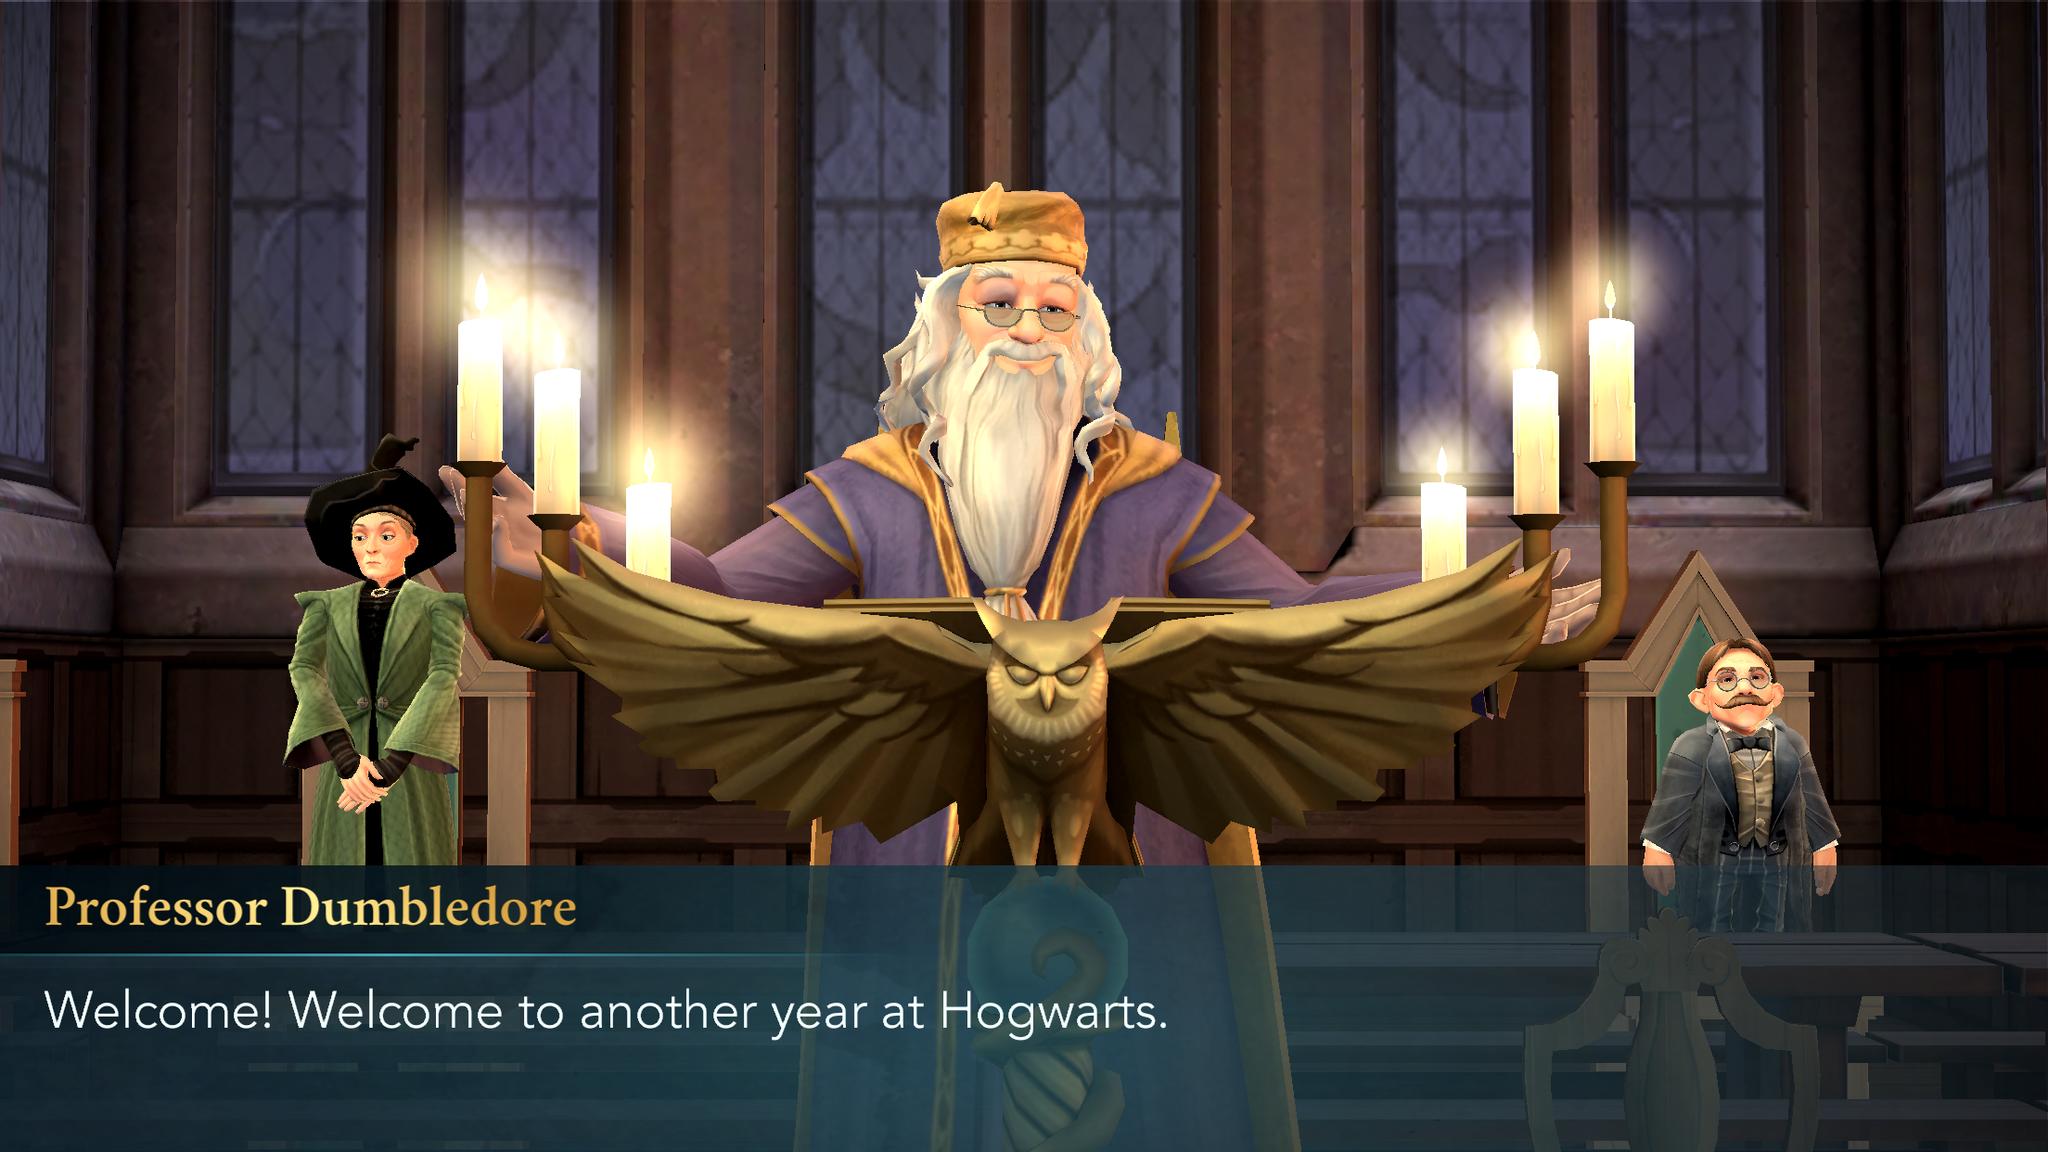 Harry Potter: Hogwarts Mystery – Apps no Google Play